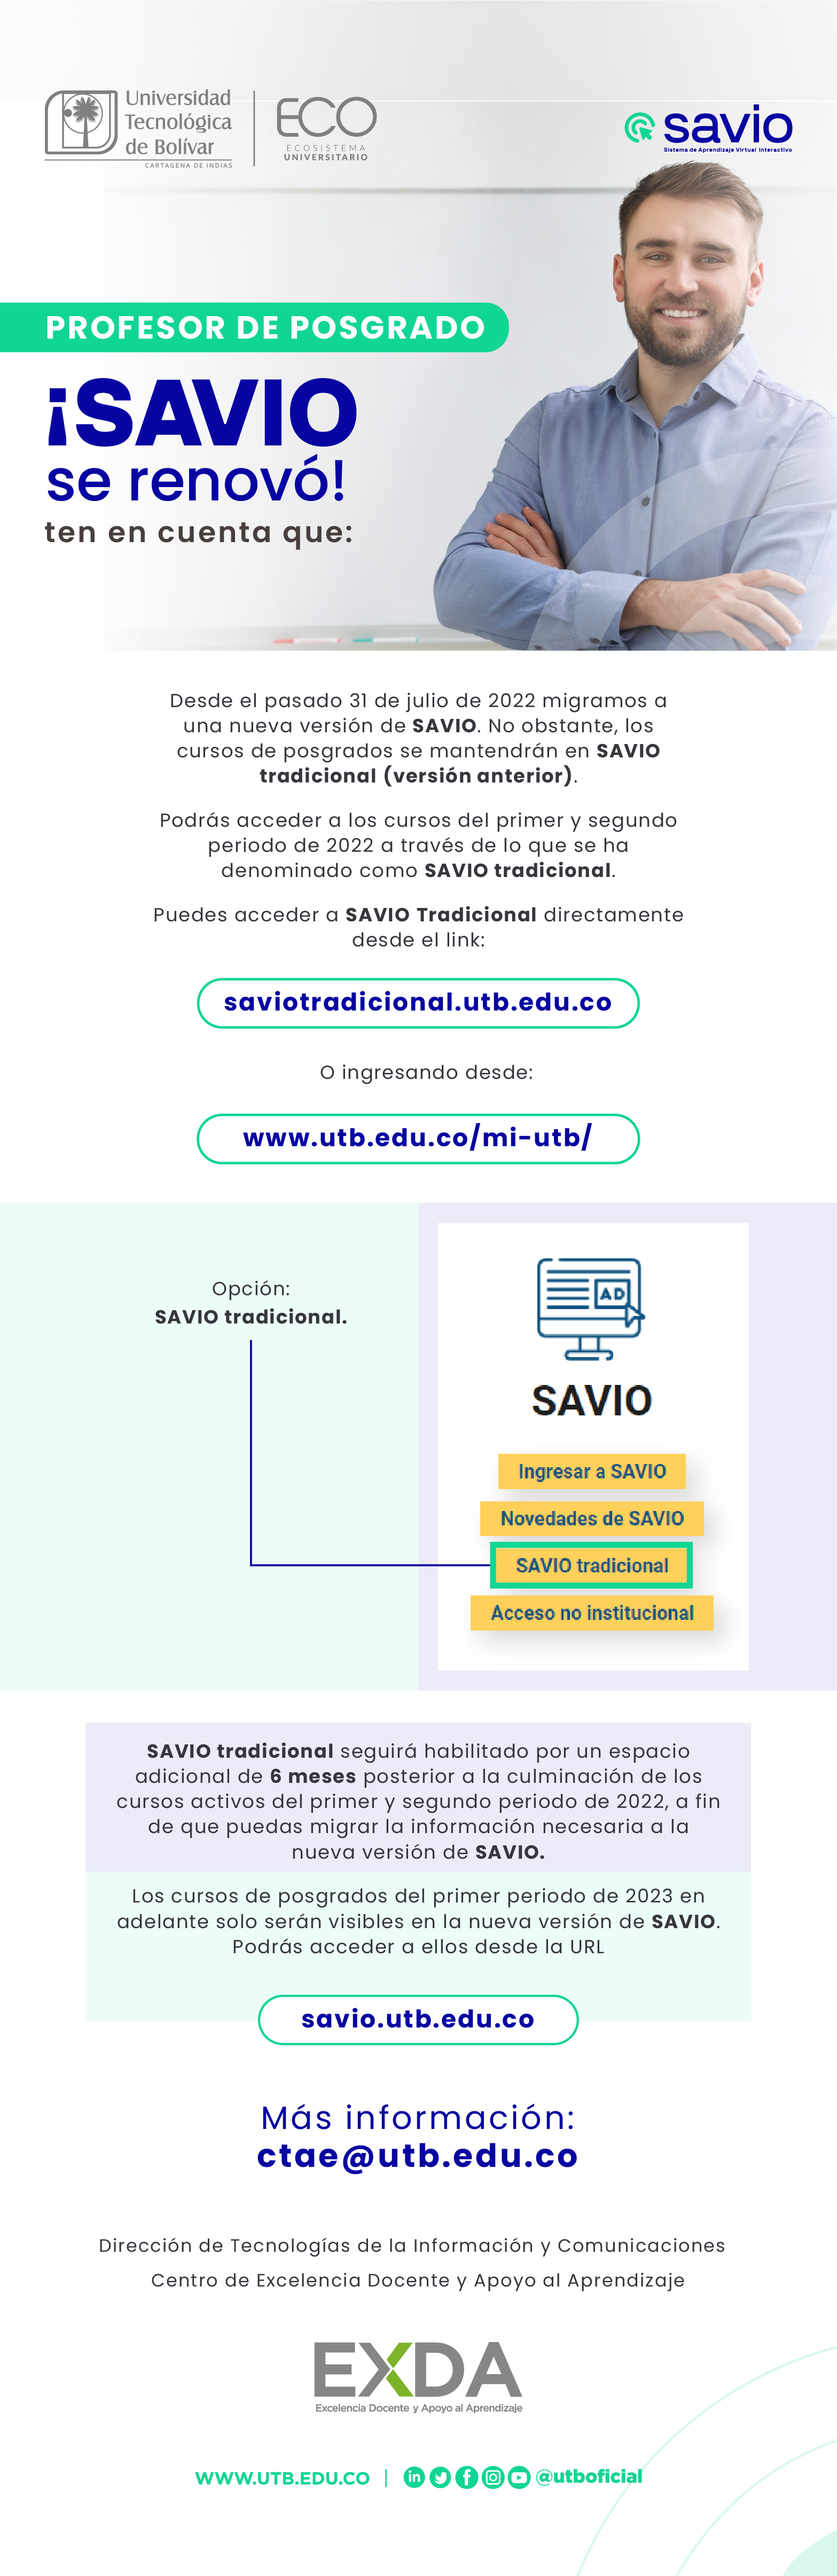 https://stage.utb.edu.co/wp-content/uploads/2022/08/Estudiantes_pregrado_IG.png